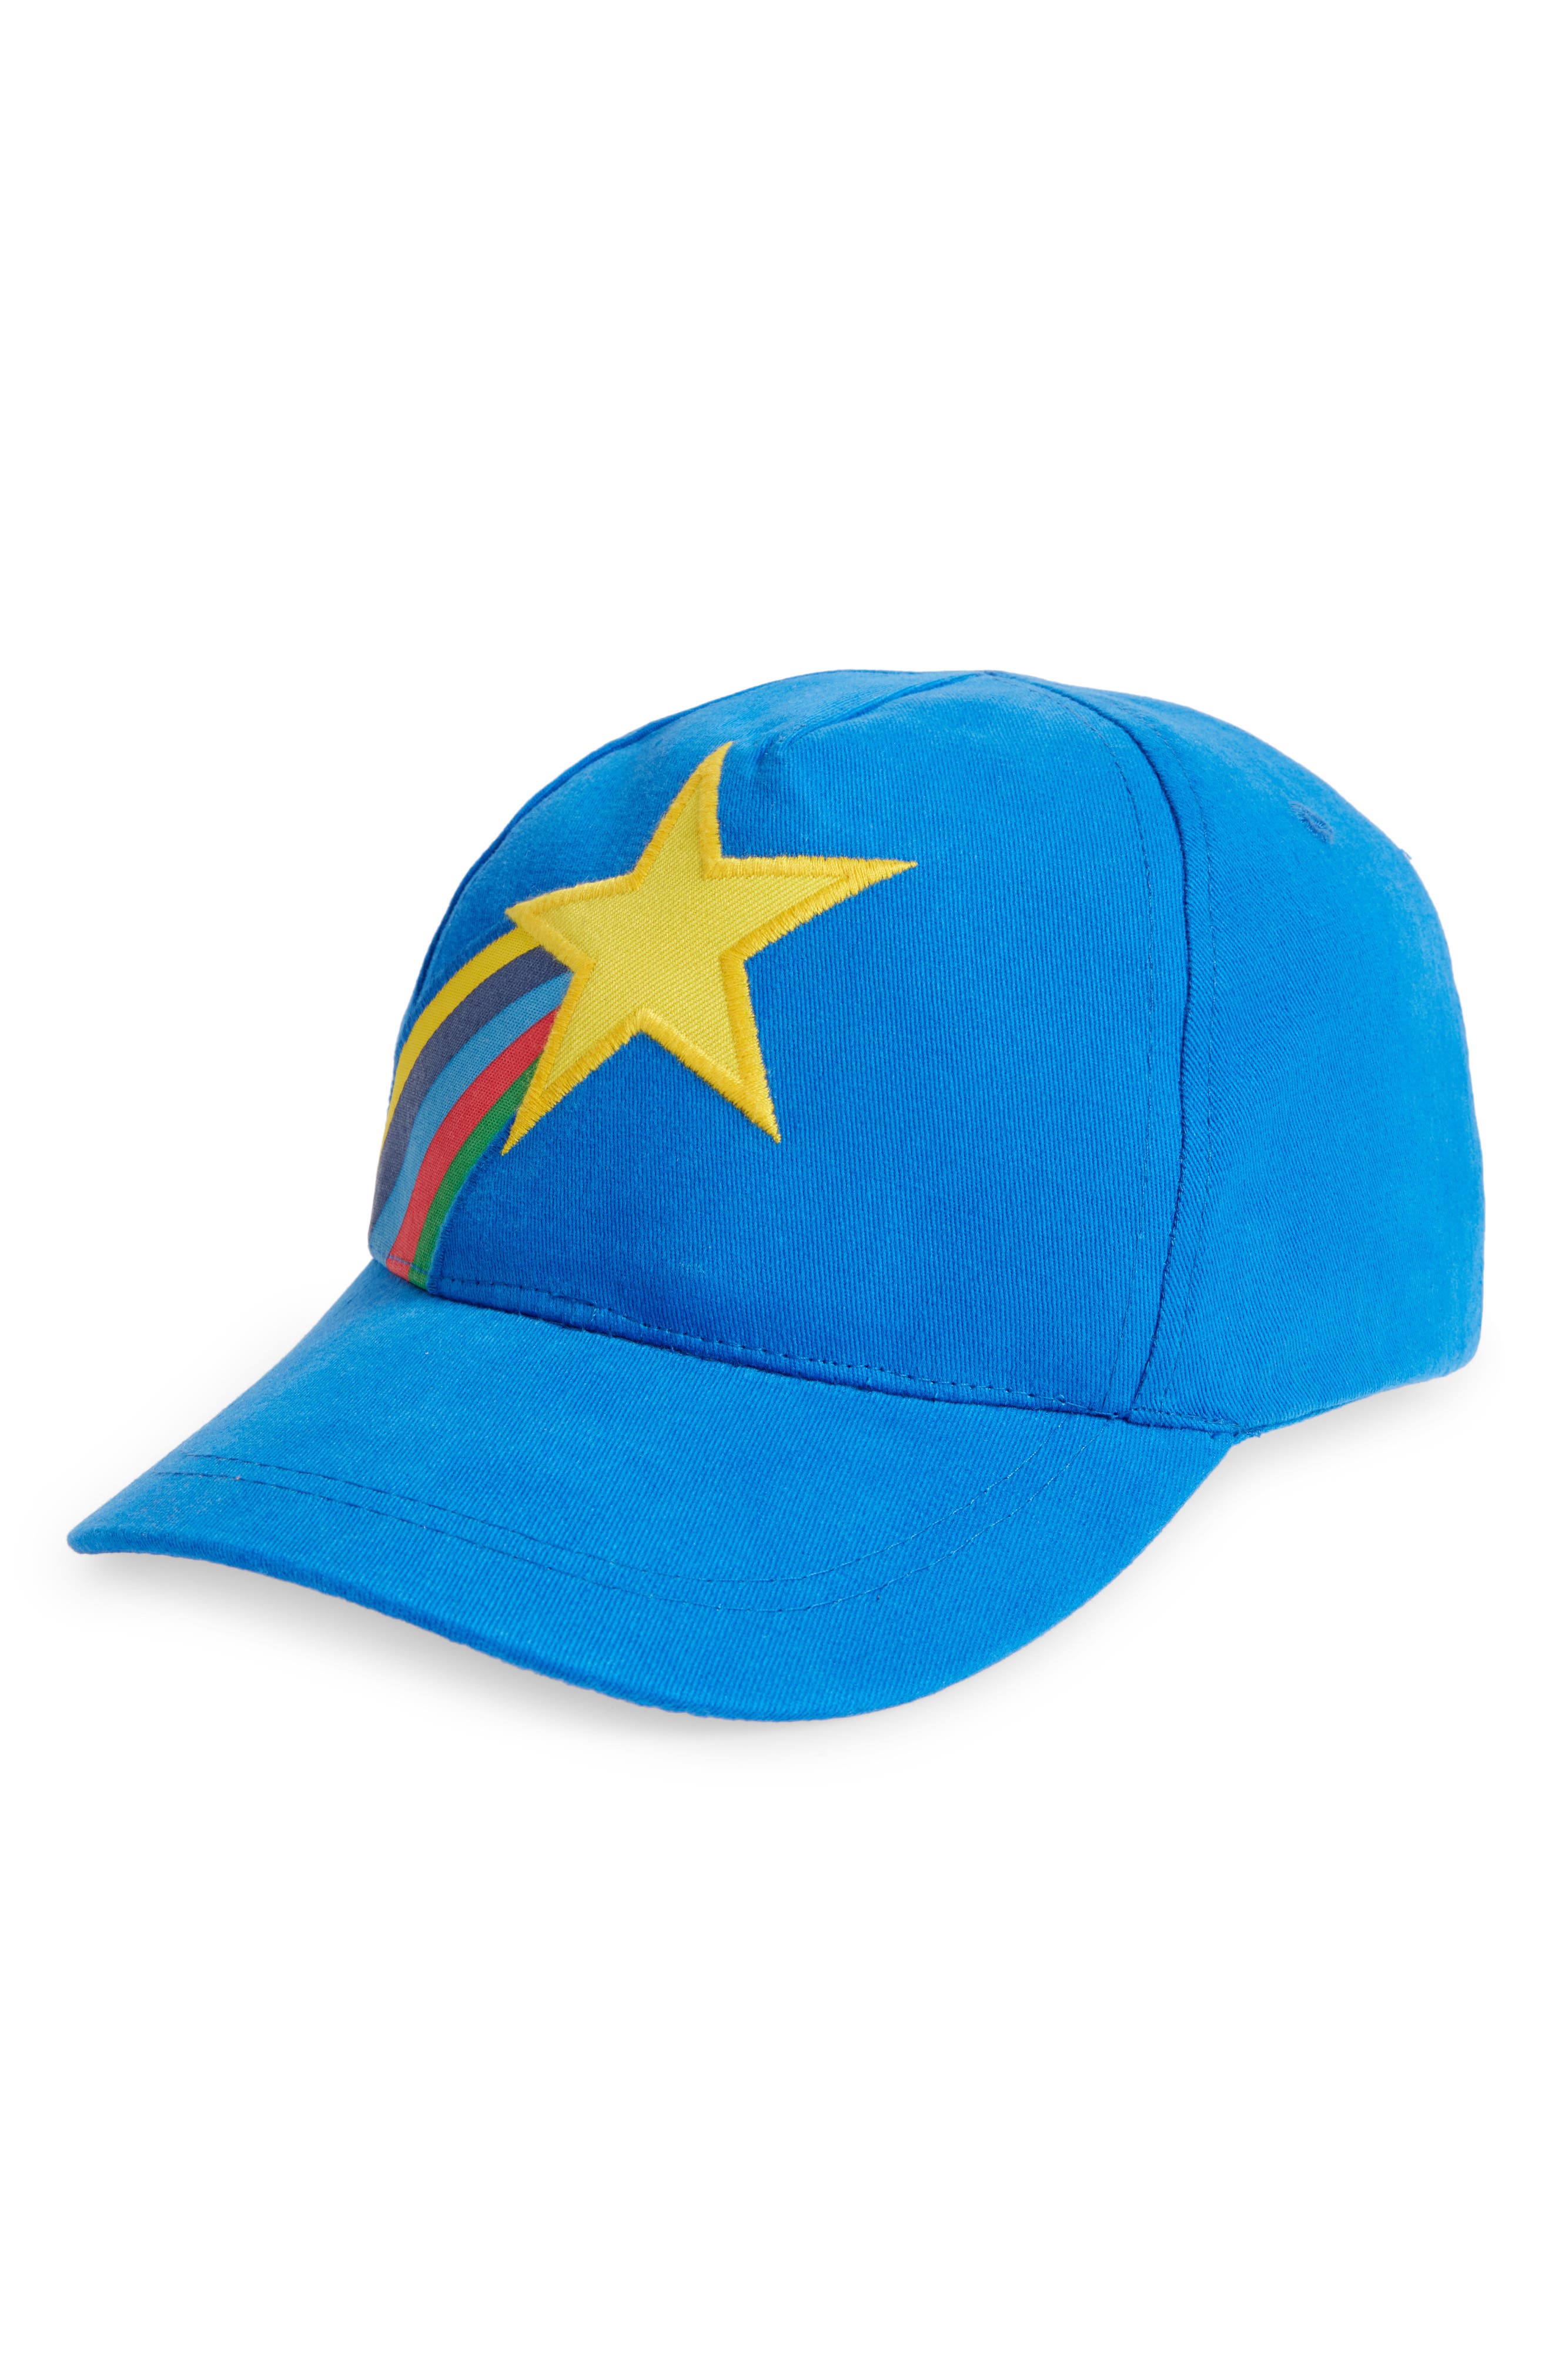 Denim Cap Bear California Love Star Baseball Dad Cap Classic Adjustable Casual Sports for Men Women Hats